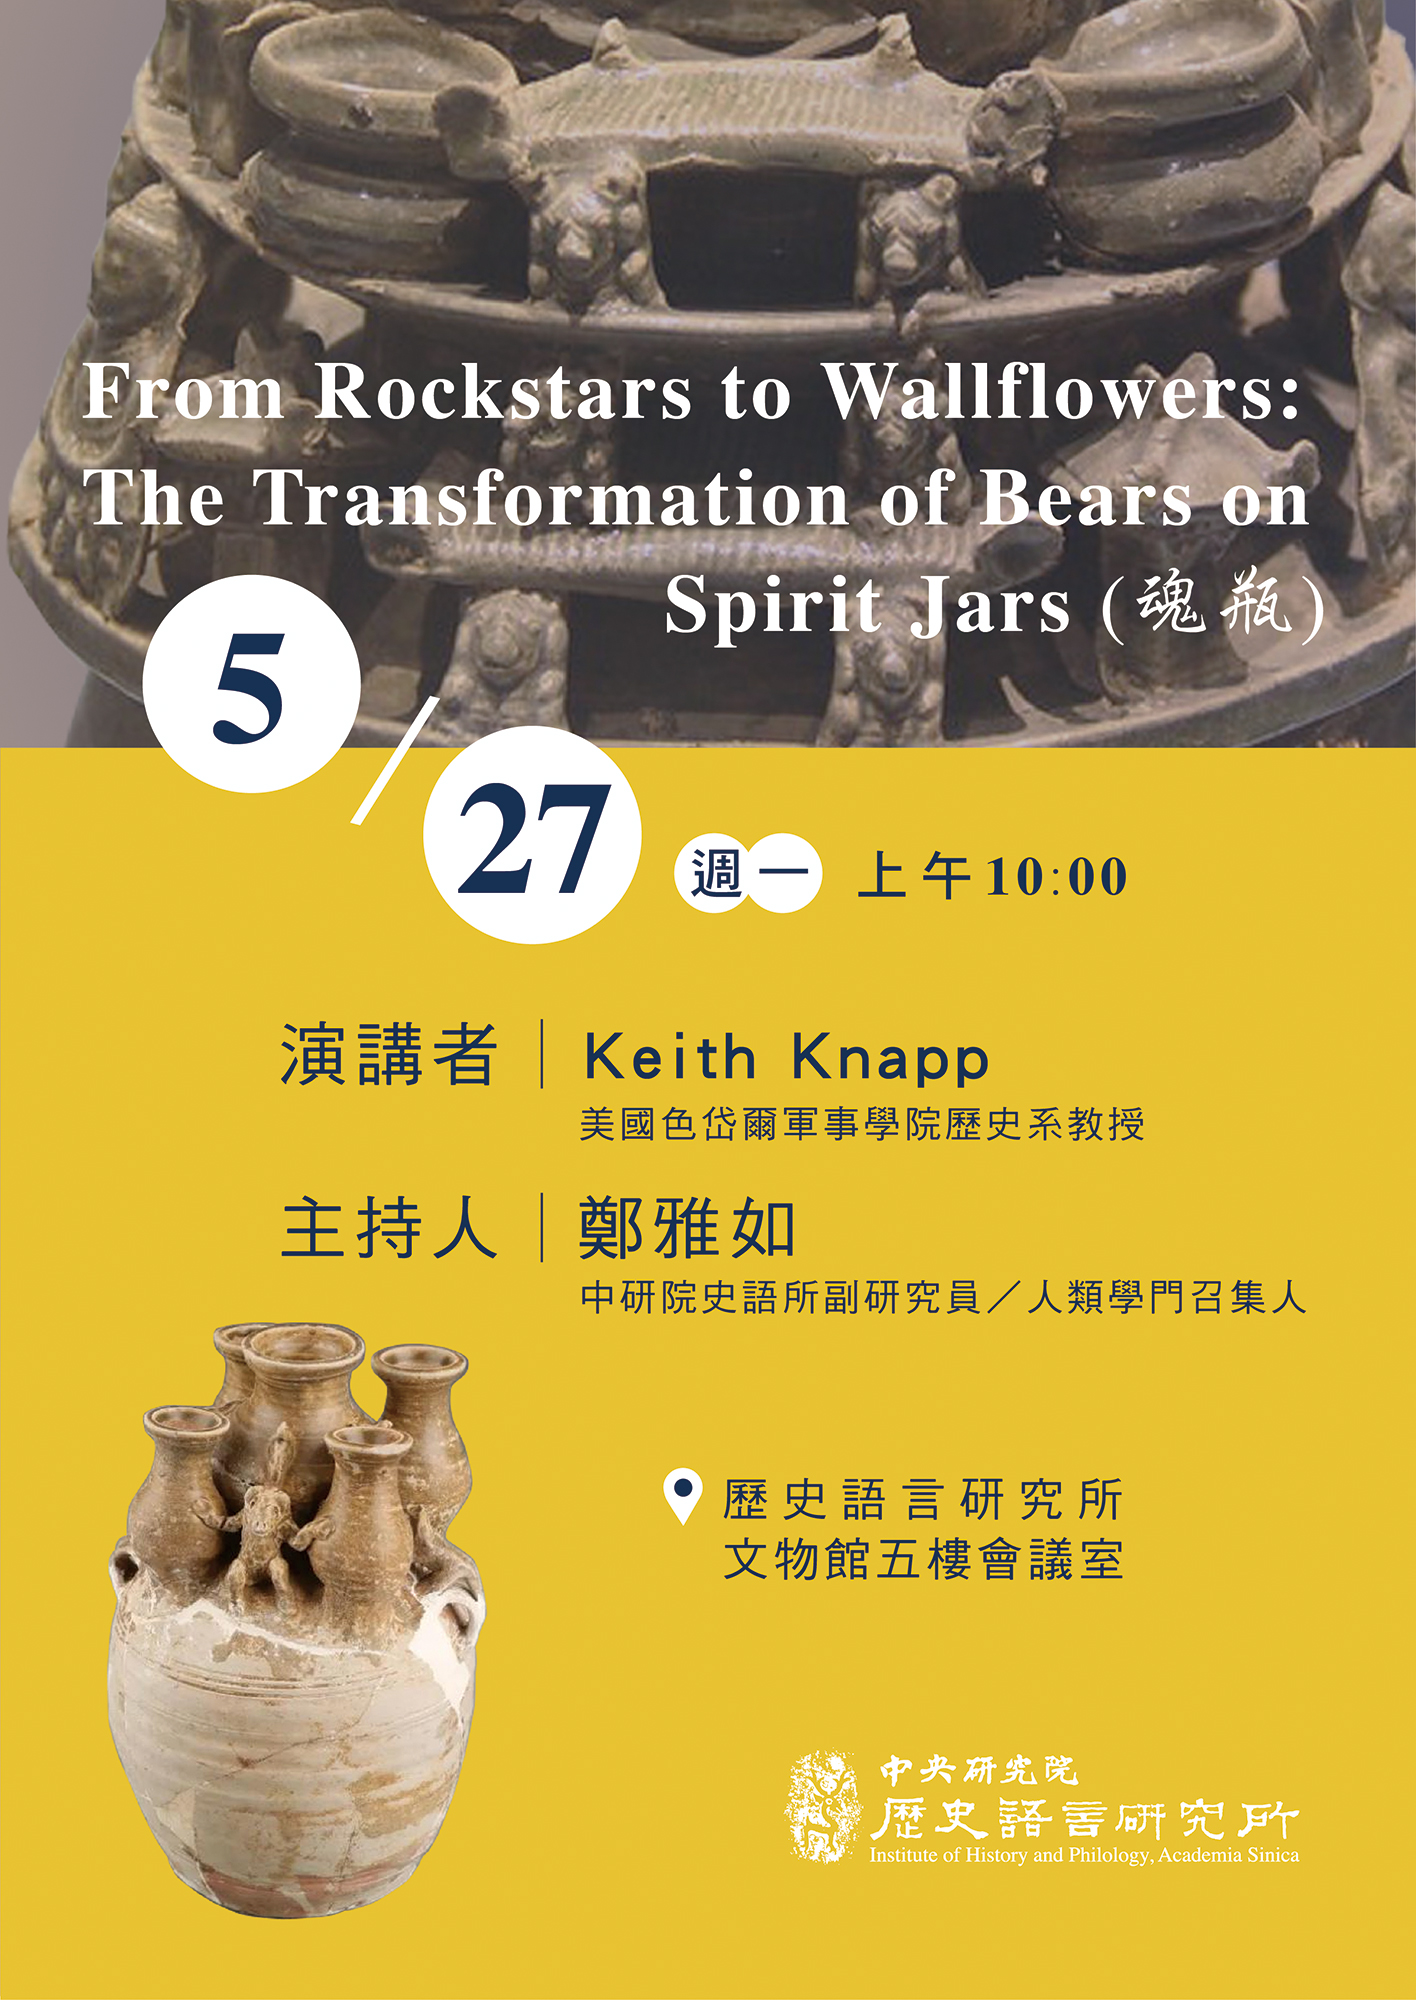 From Rockstars to Wallflowers: The Transformation of Bears on Spirit Jars (魂瓶)